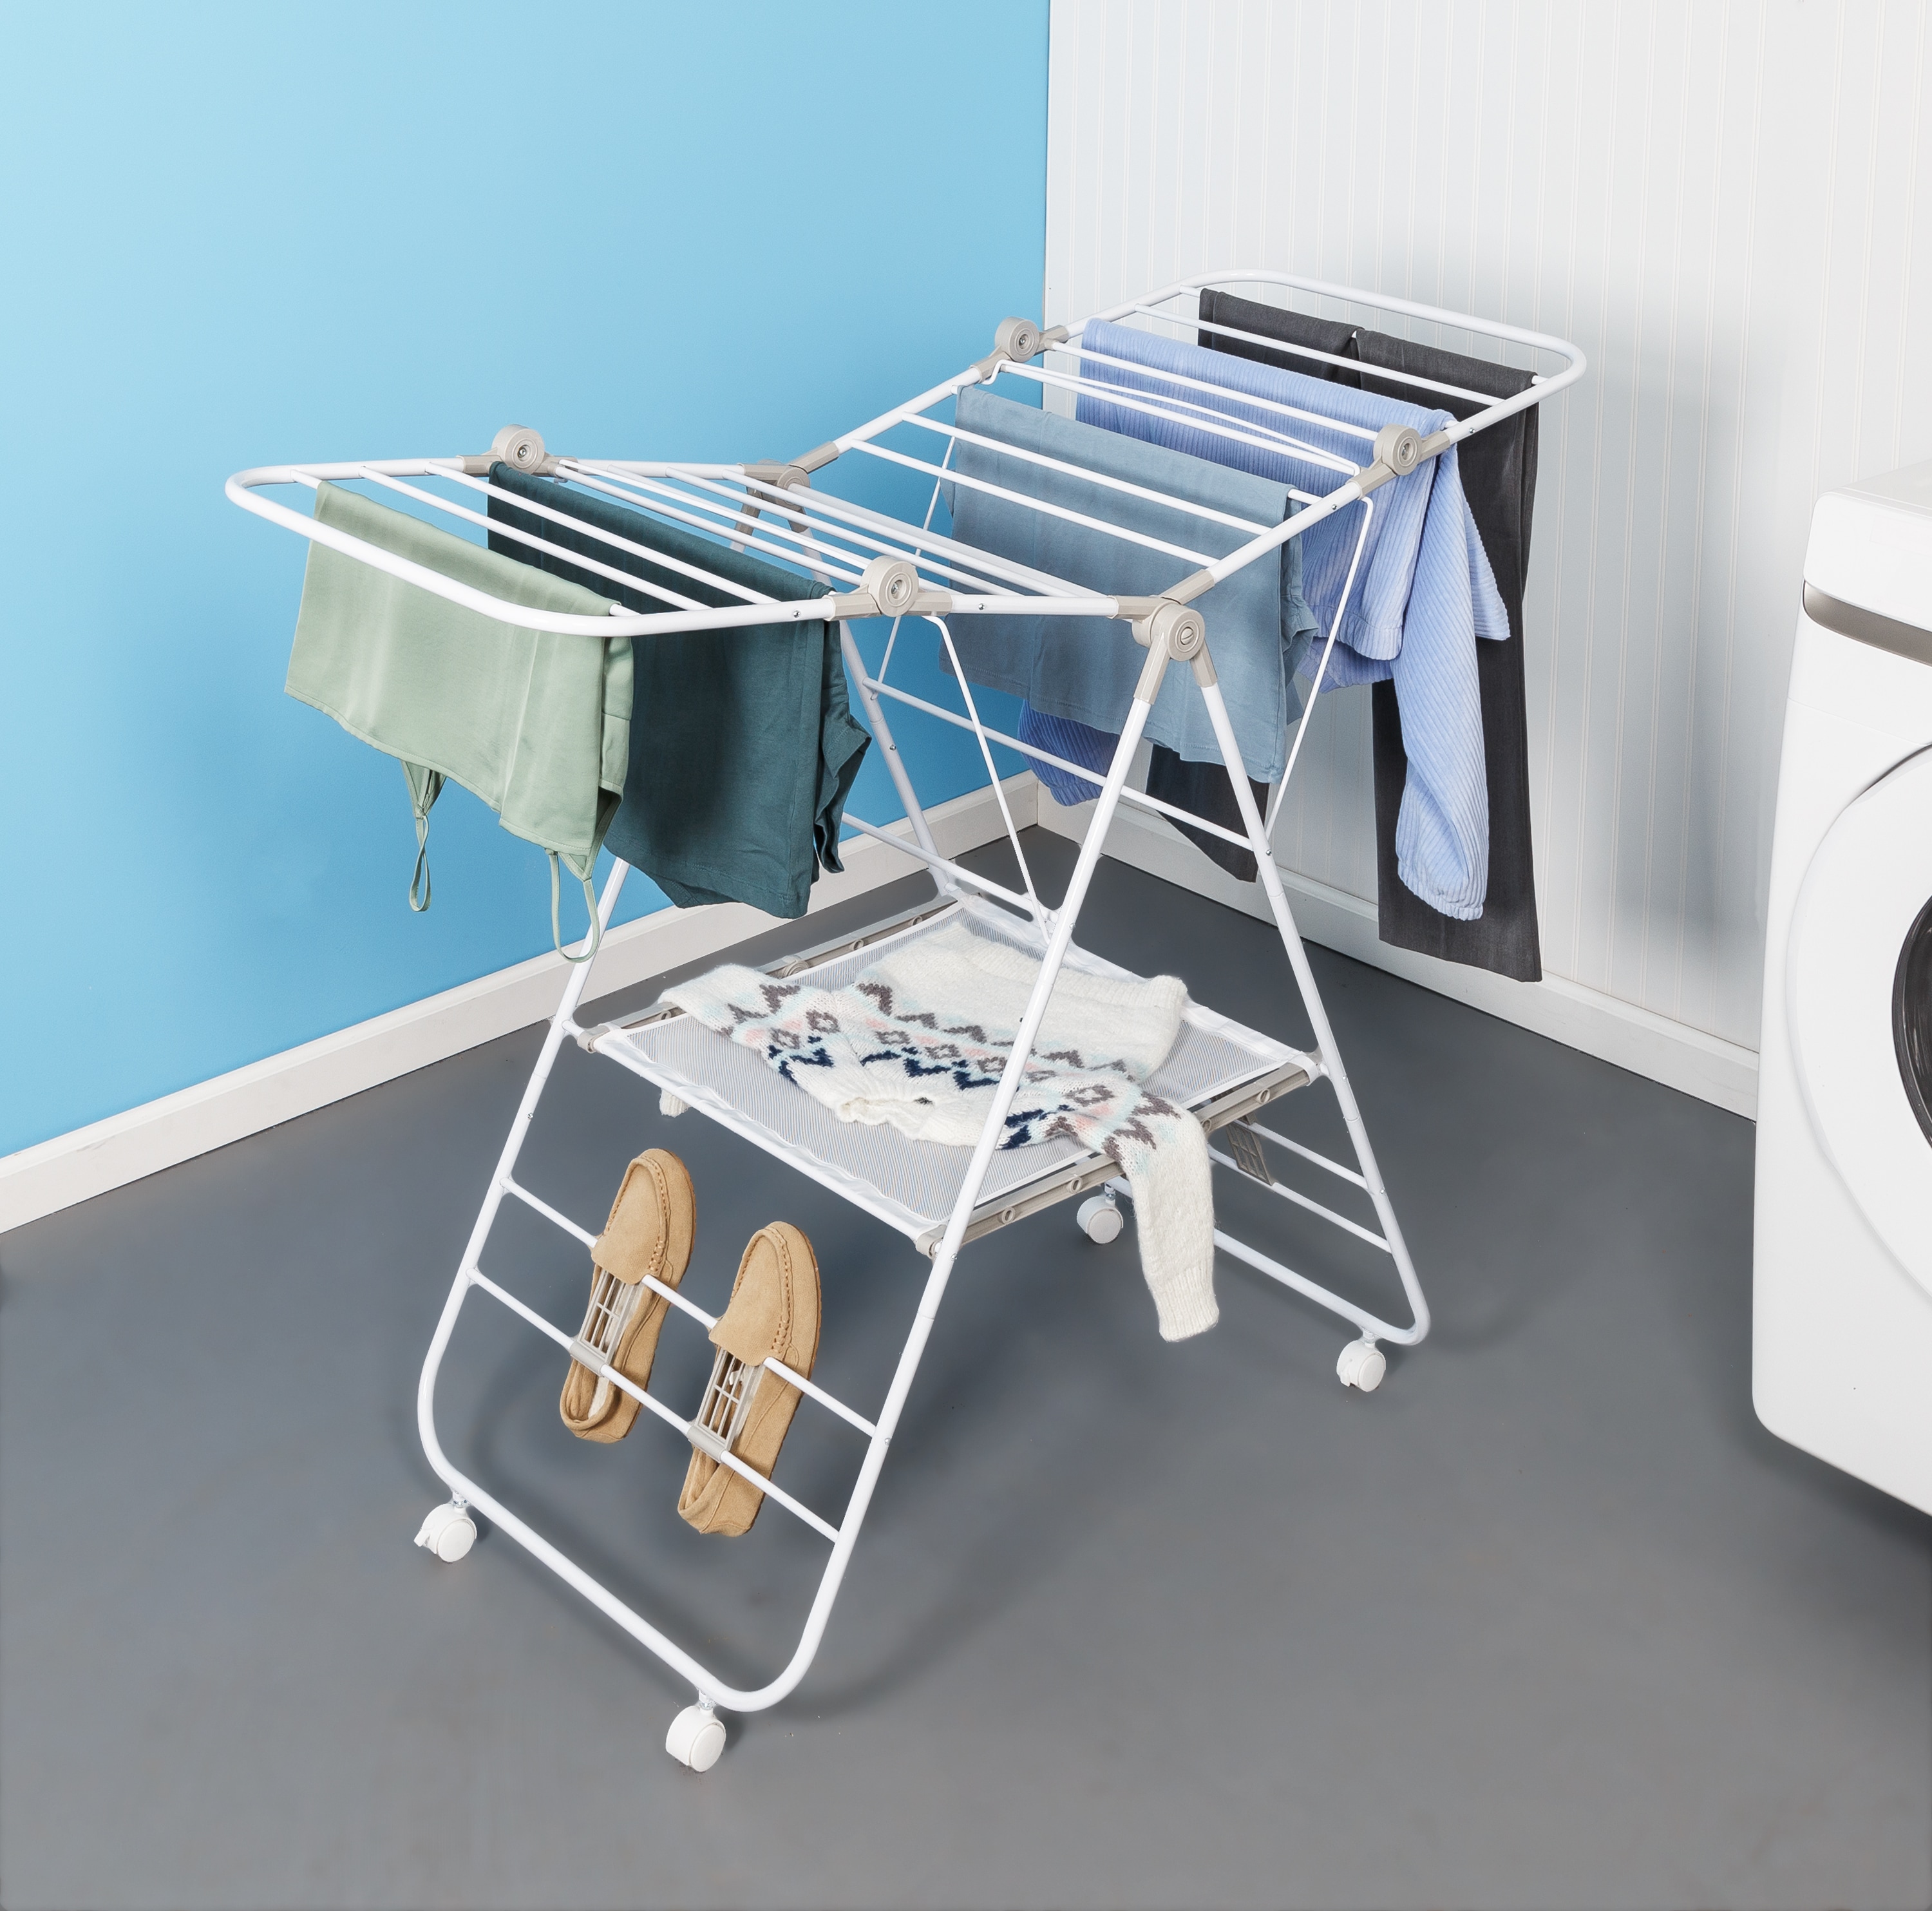 Hastings Home 3-Tier 45-in Metal Drying Rack, Freestanding Laundry